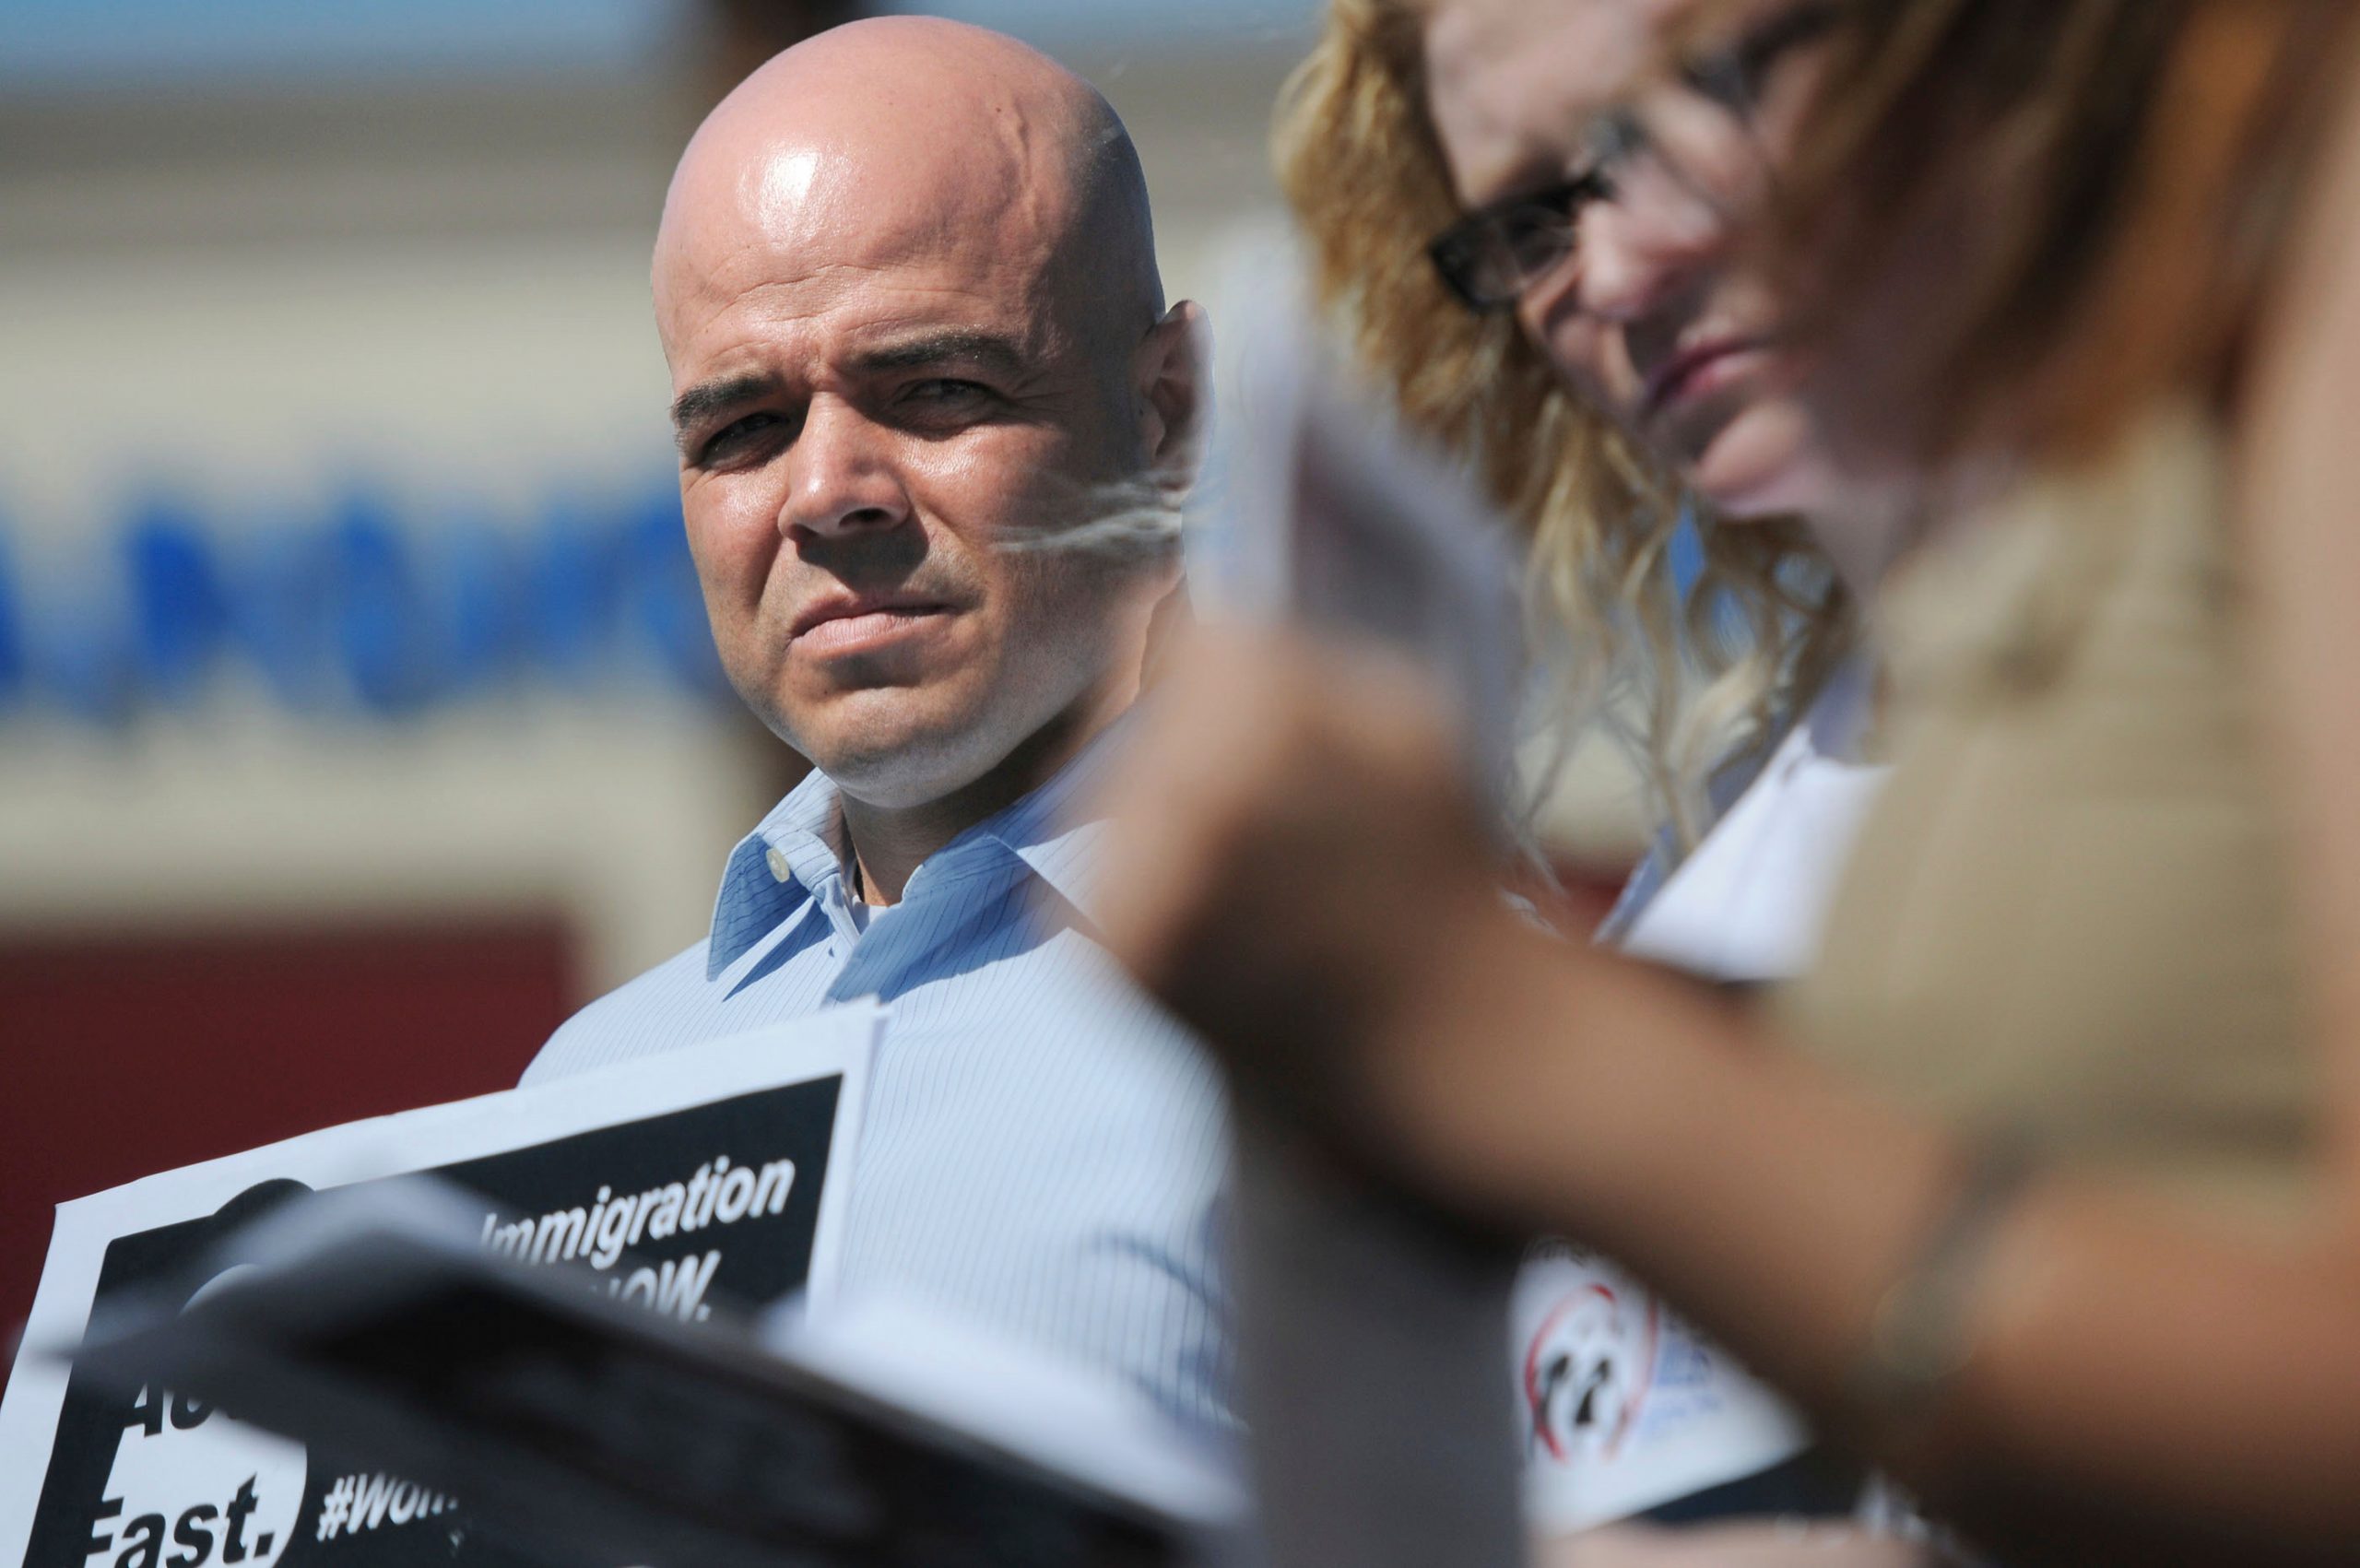 Nevada politician Robert Telles arrested in killing of journalist Jeff German